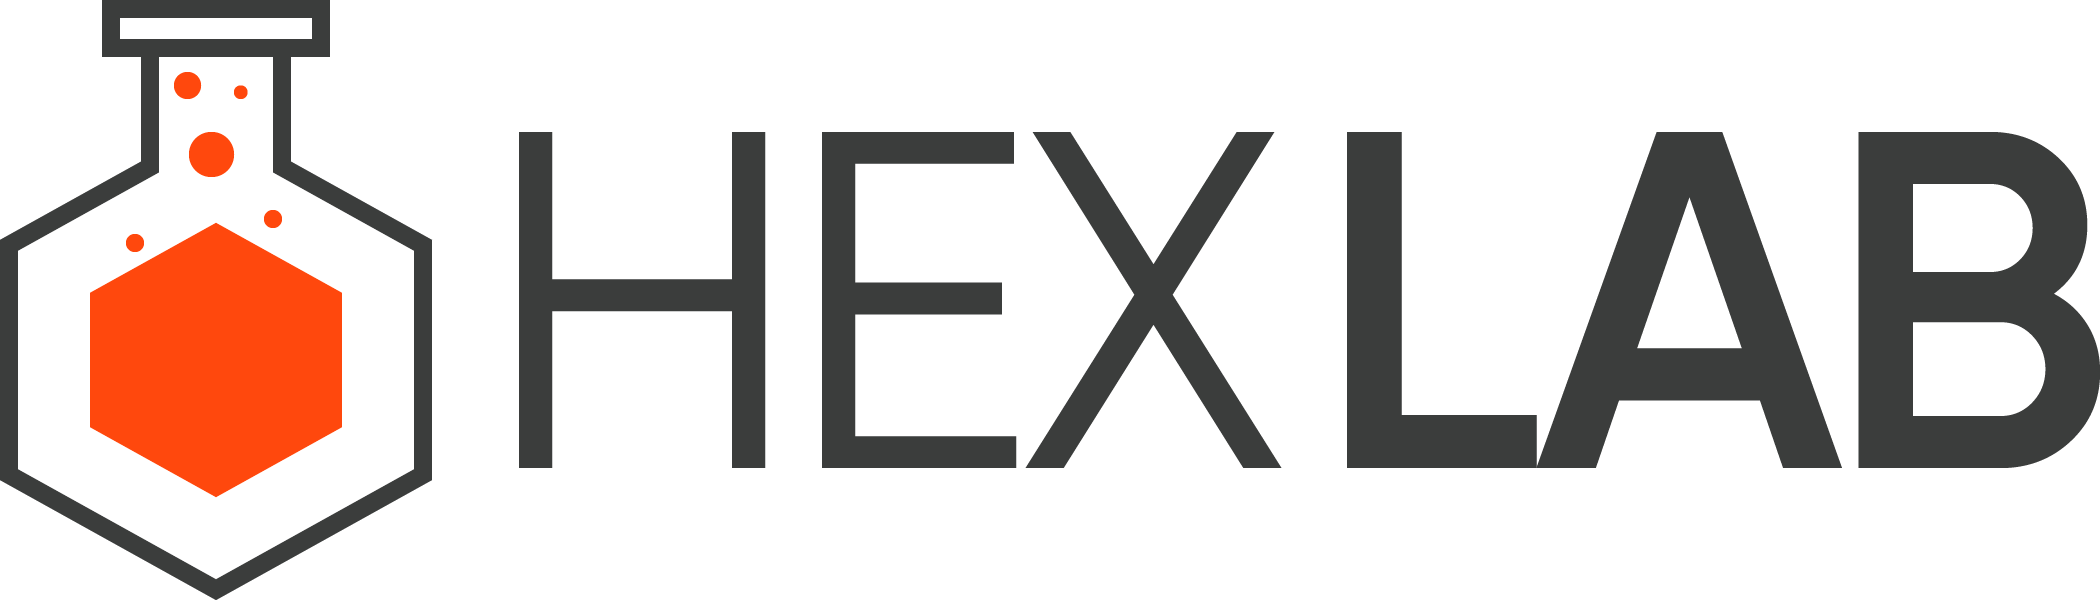 hex-lab-1